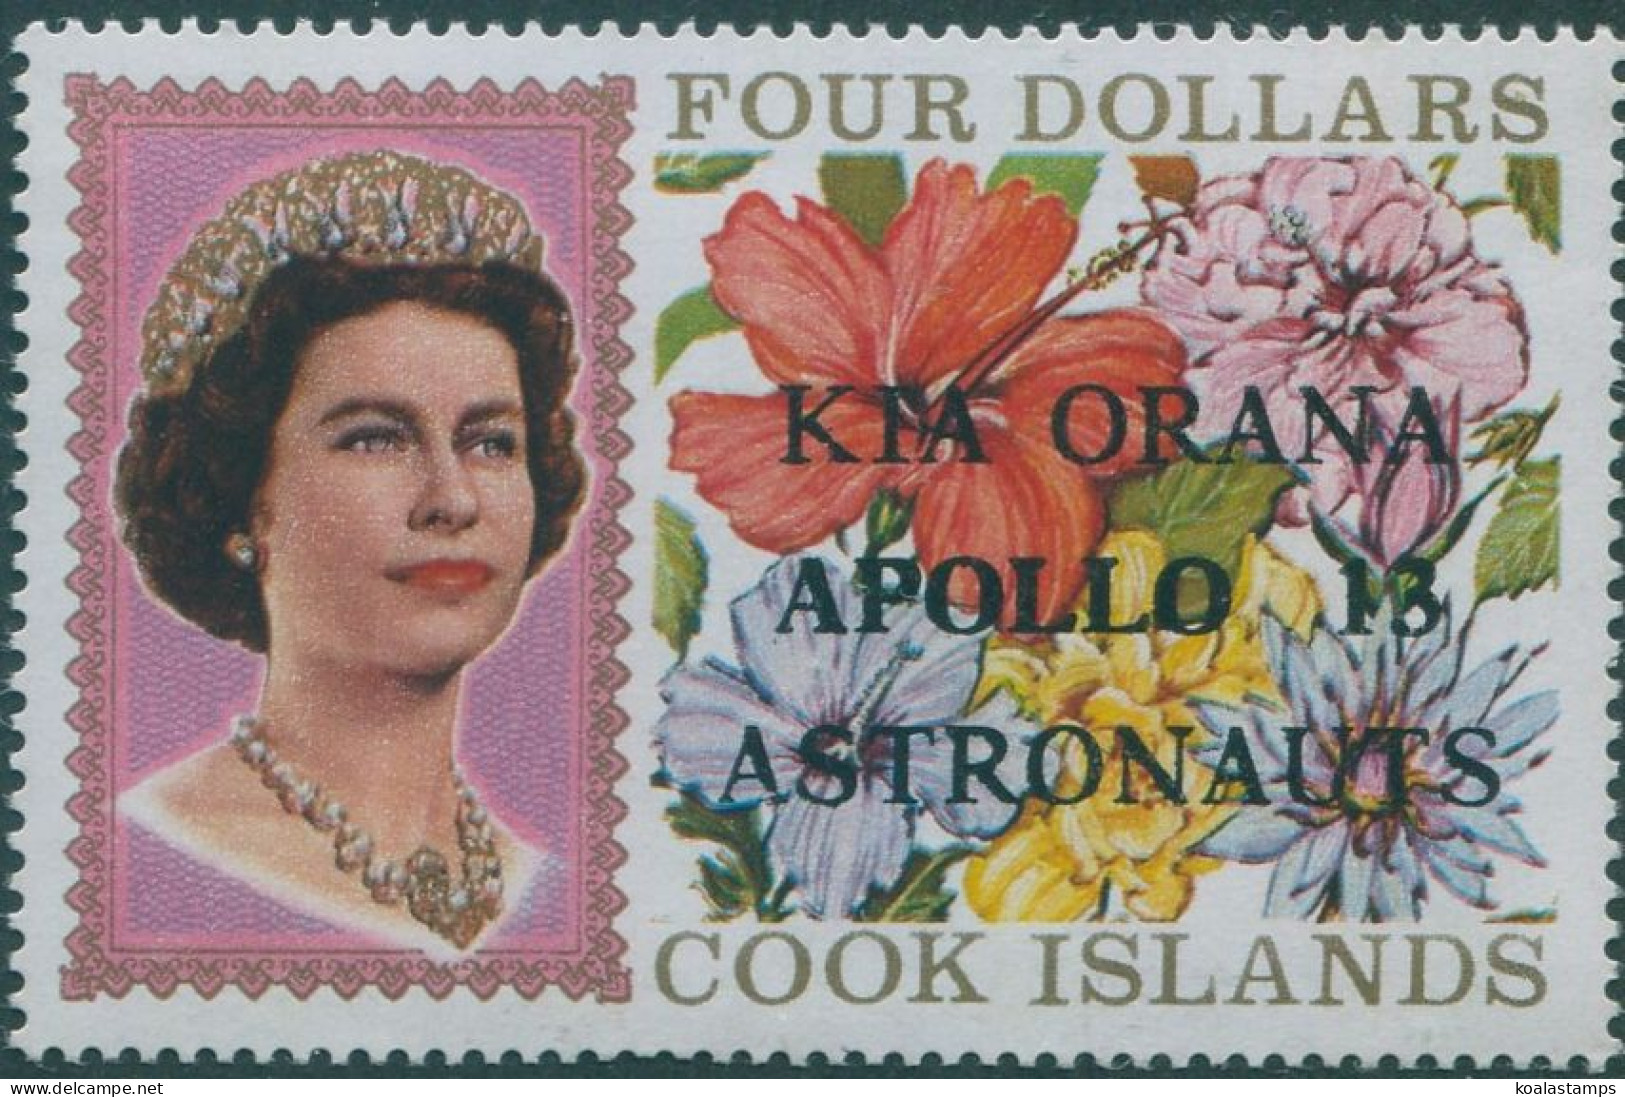 Cook Islands 1970 SG327 $4 QEII Flowers KIA ORANA APOLLO 13 ASTRONAUTS Ovpt MLH - Cookeilanden